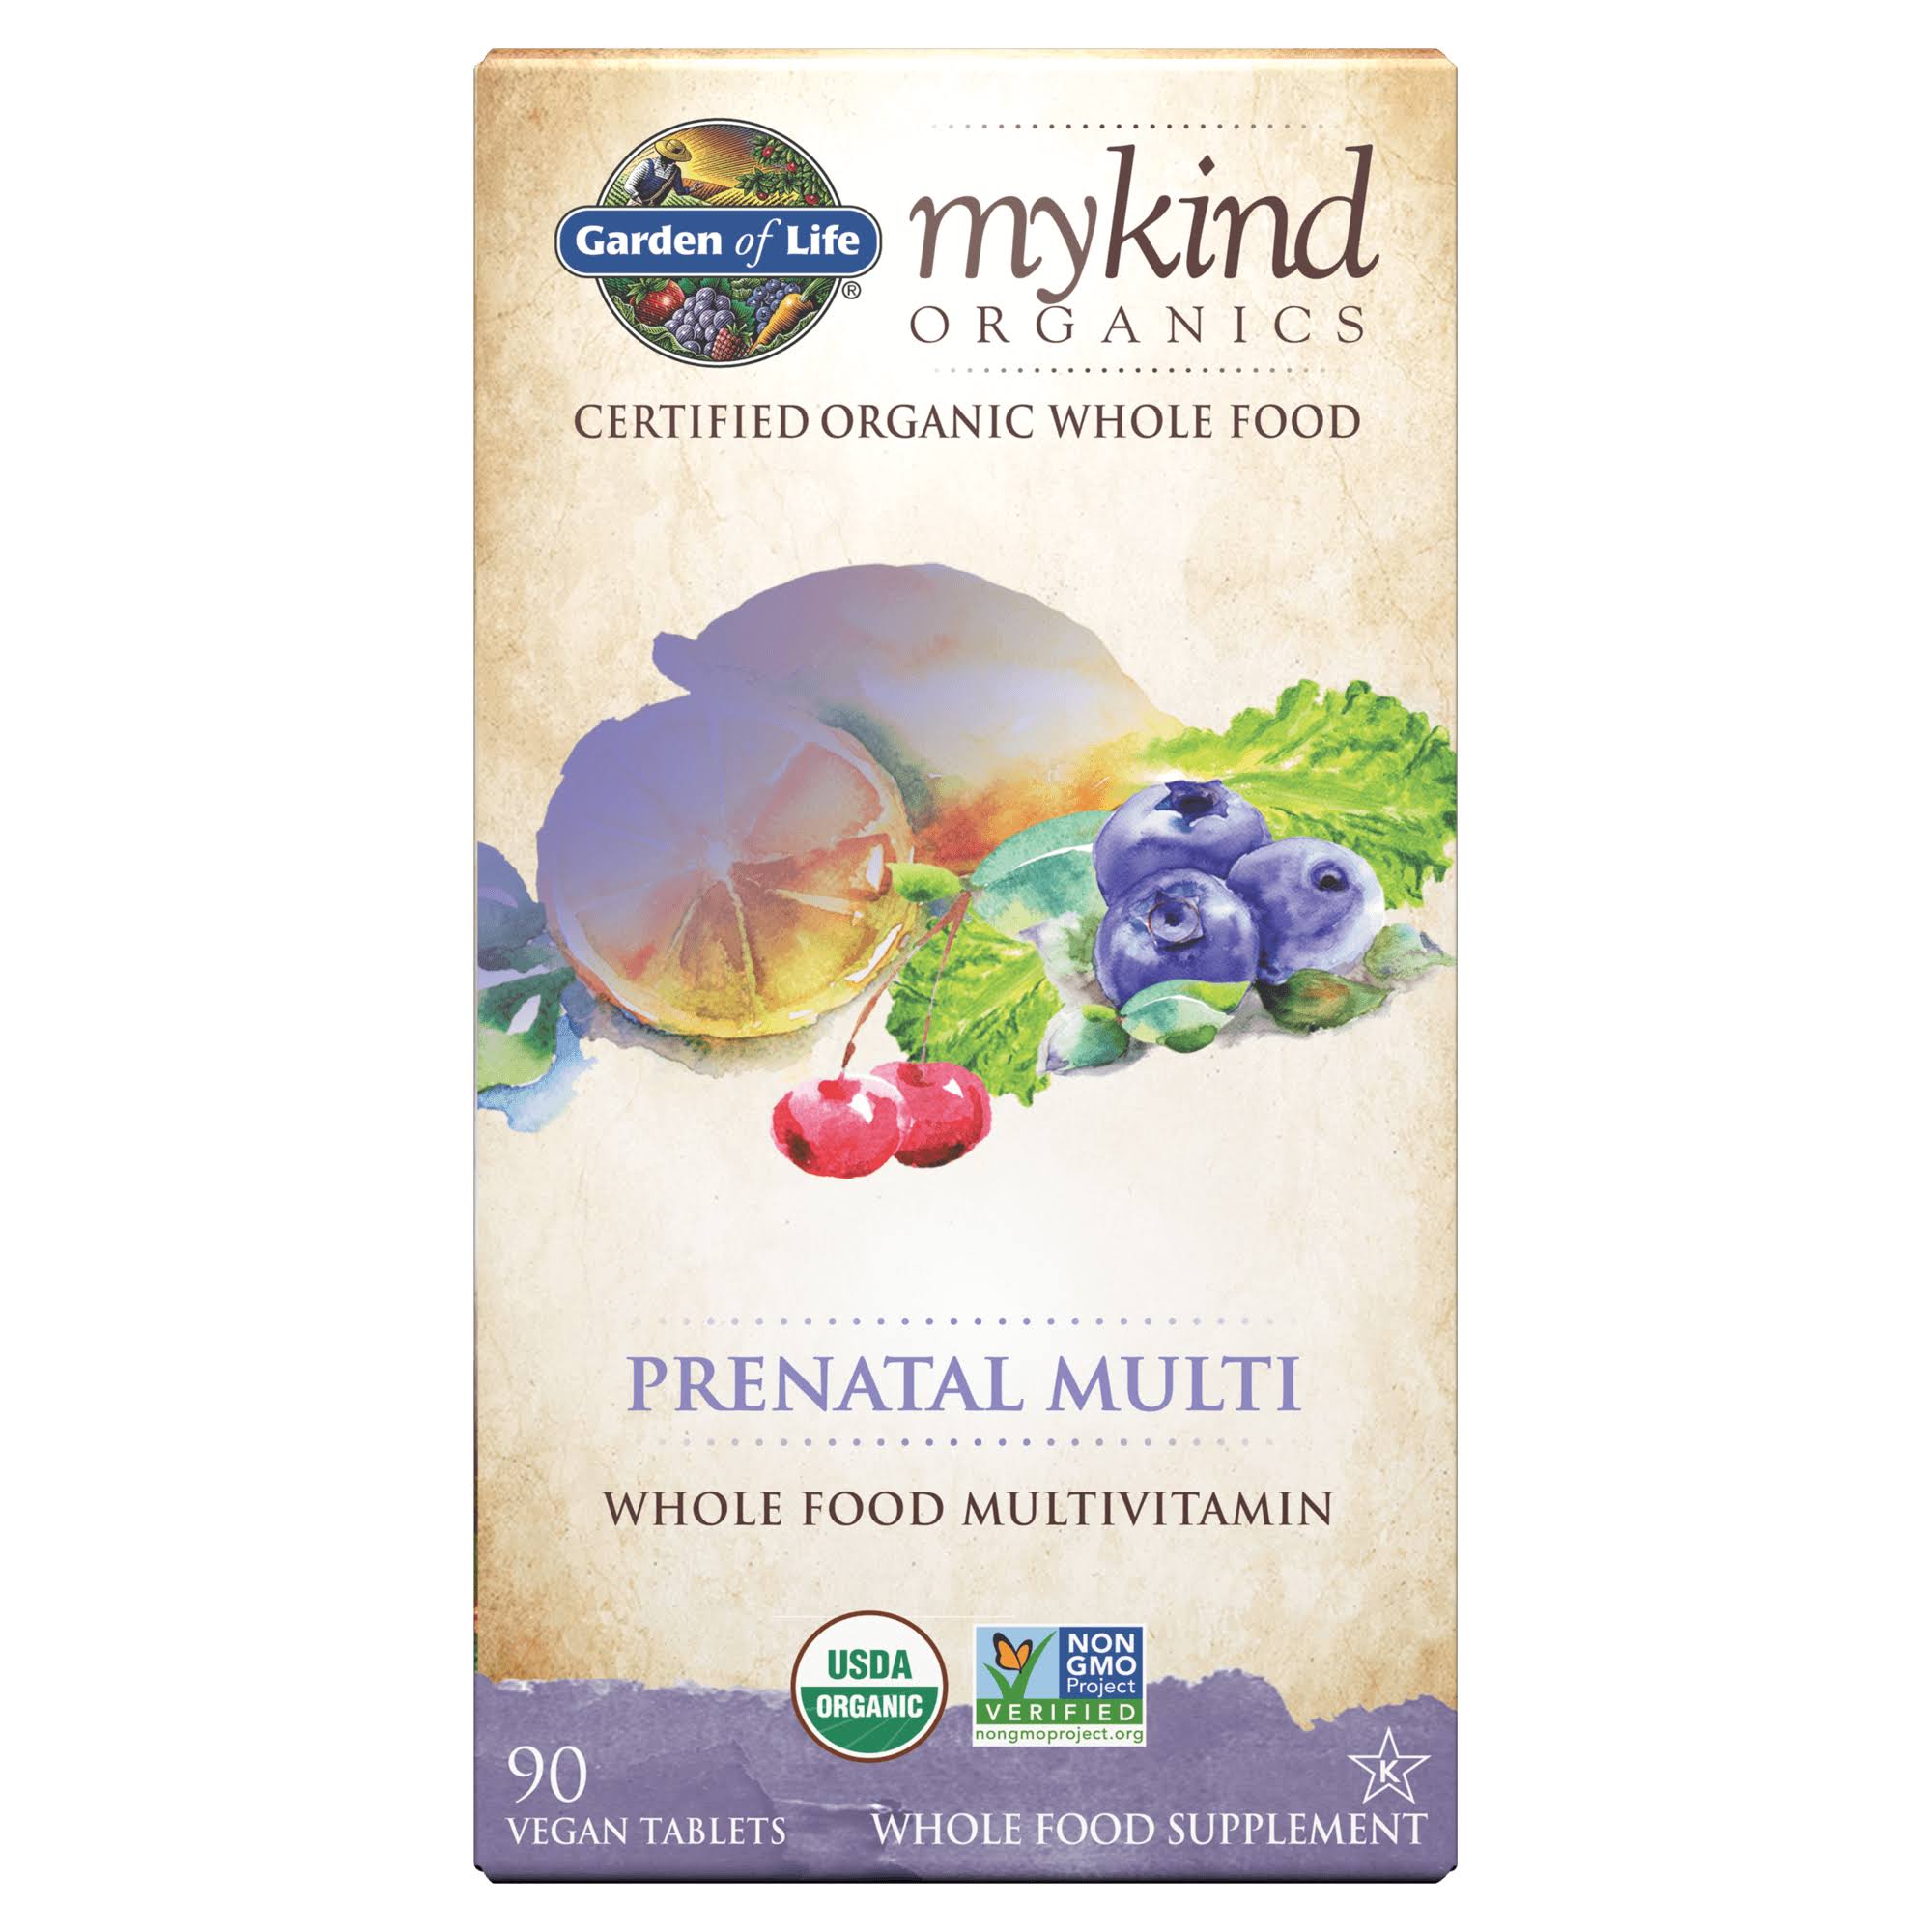 Garden Of Life Mykind Organics Prenatal Multi Whole Food Multivitamin - 90 Tablets